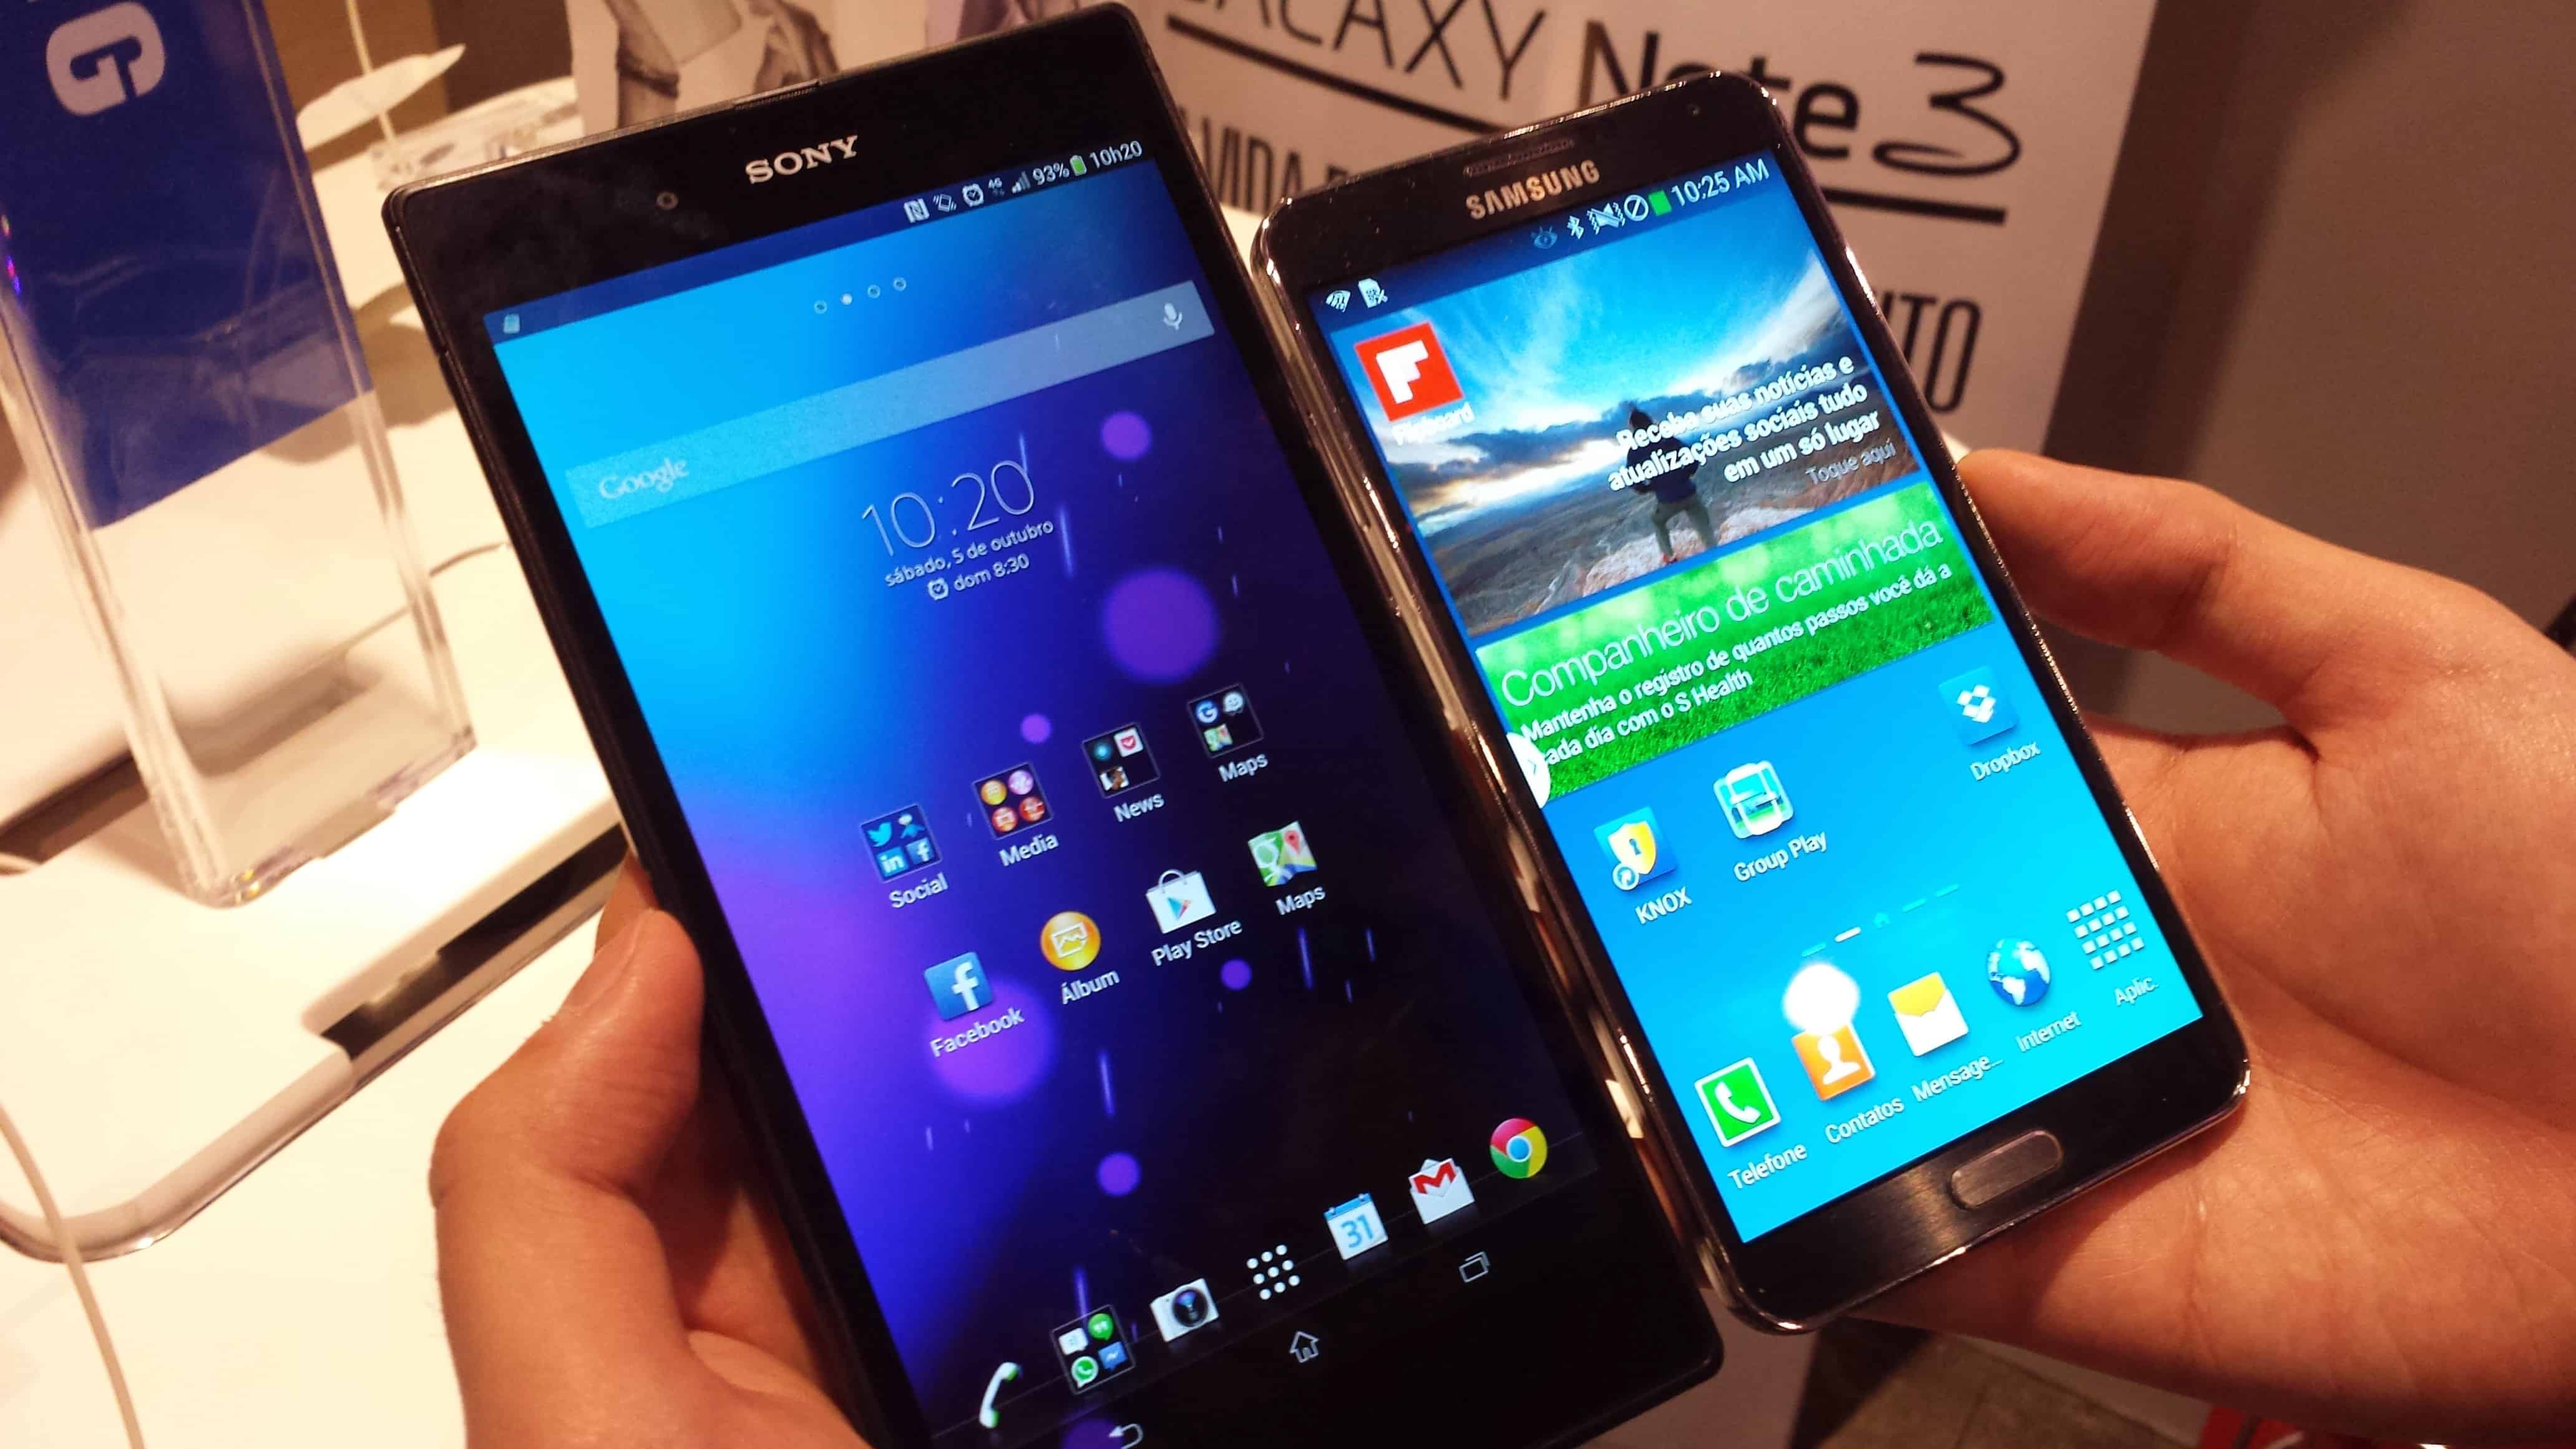 Vídeo compara o Galaxy Note 3 vs Xperia Z ultra 29